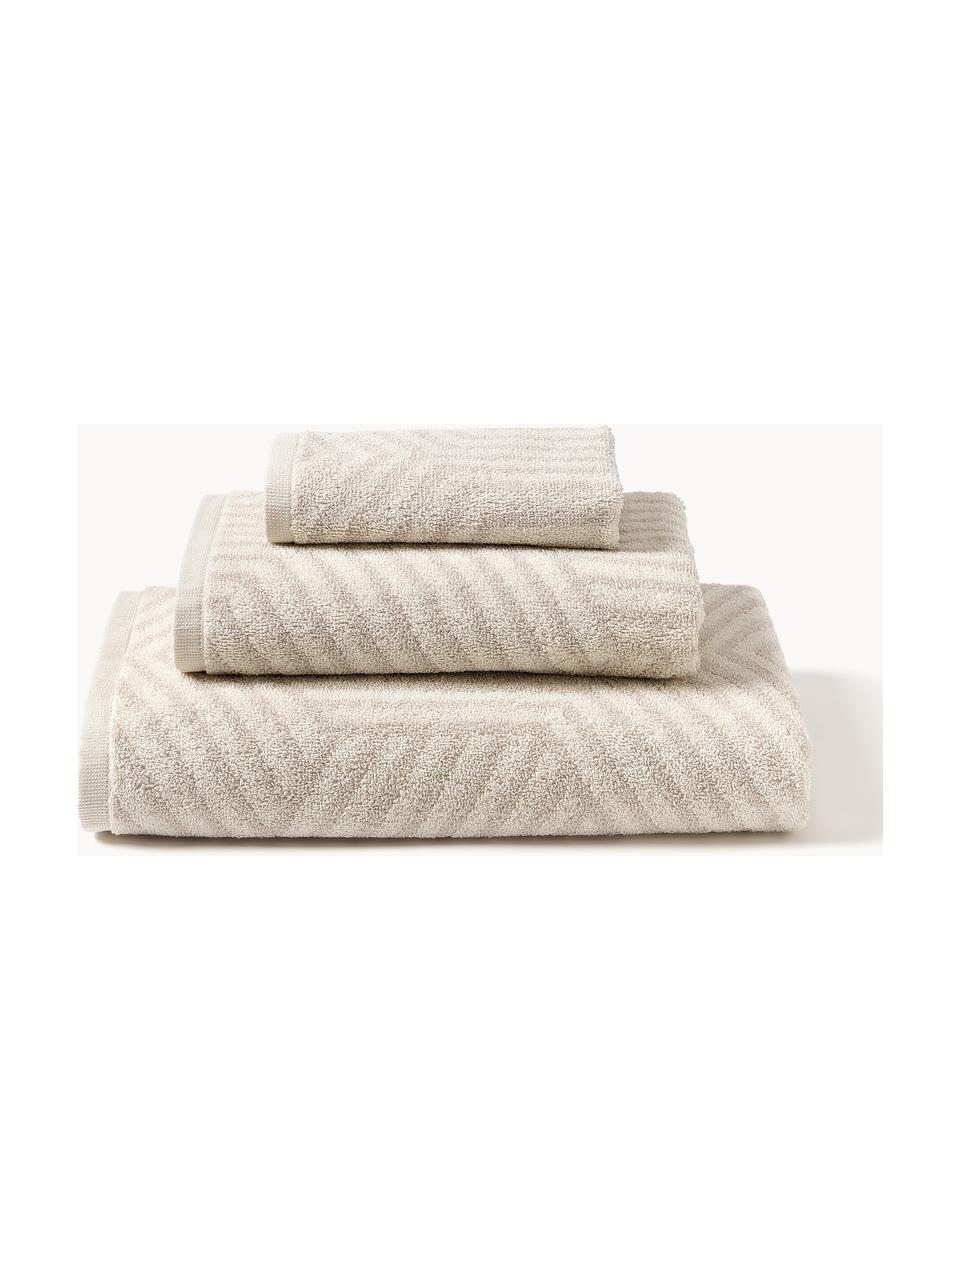 Set de toallas Fatu, tamaños diferentes, Tonos beige claros, Set de 3 (toalla tocador, toalla lavabo y toalla ducha)